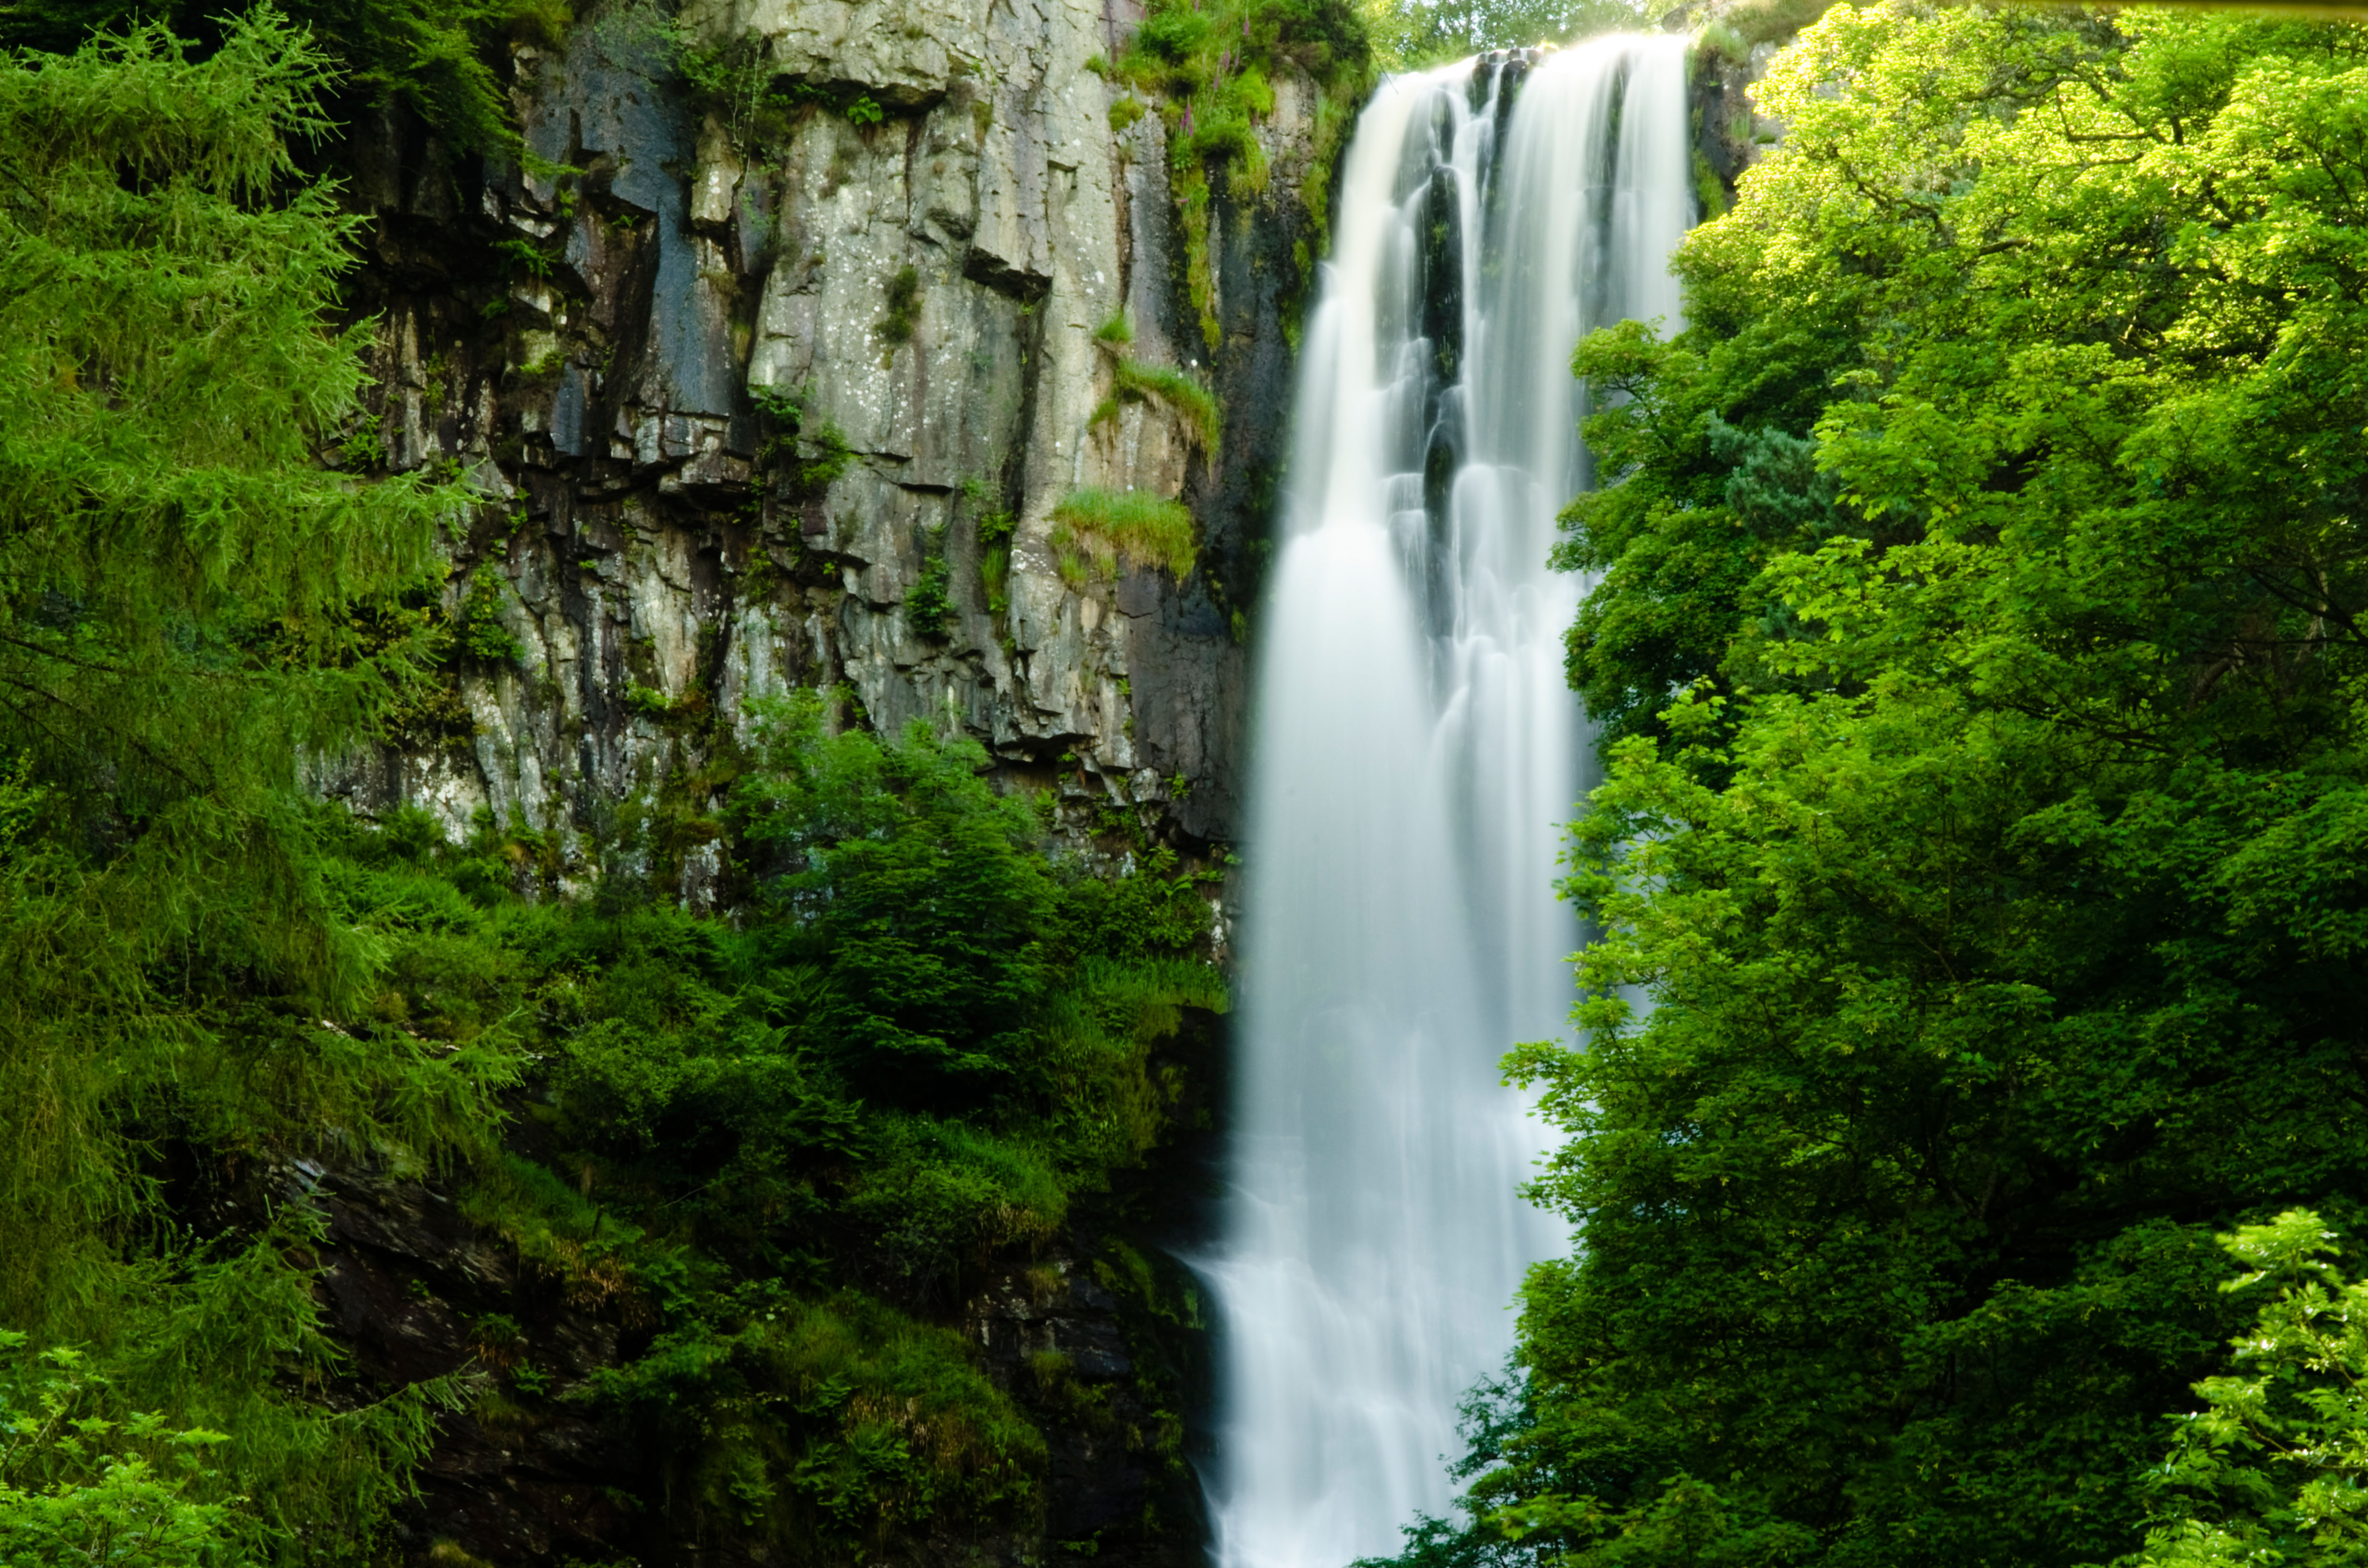 Pistyll Rhaeadr Wales | Britain's 15 most beautiful waterfalls - Travel